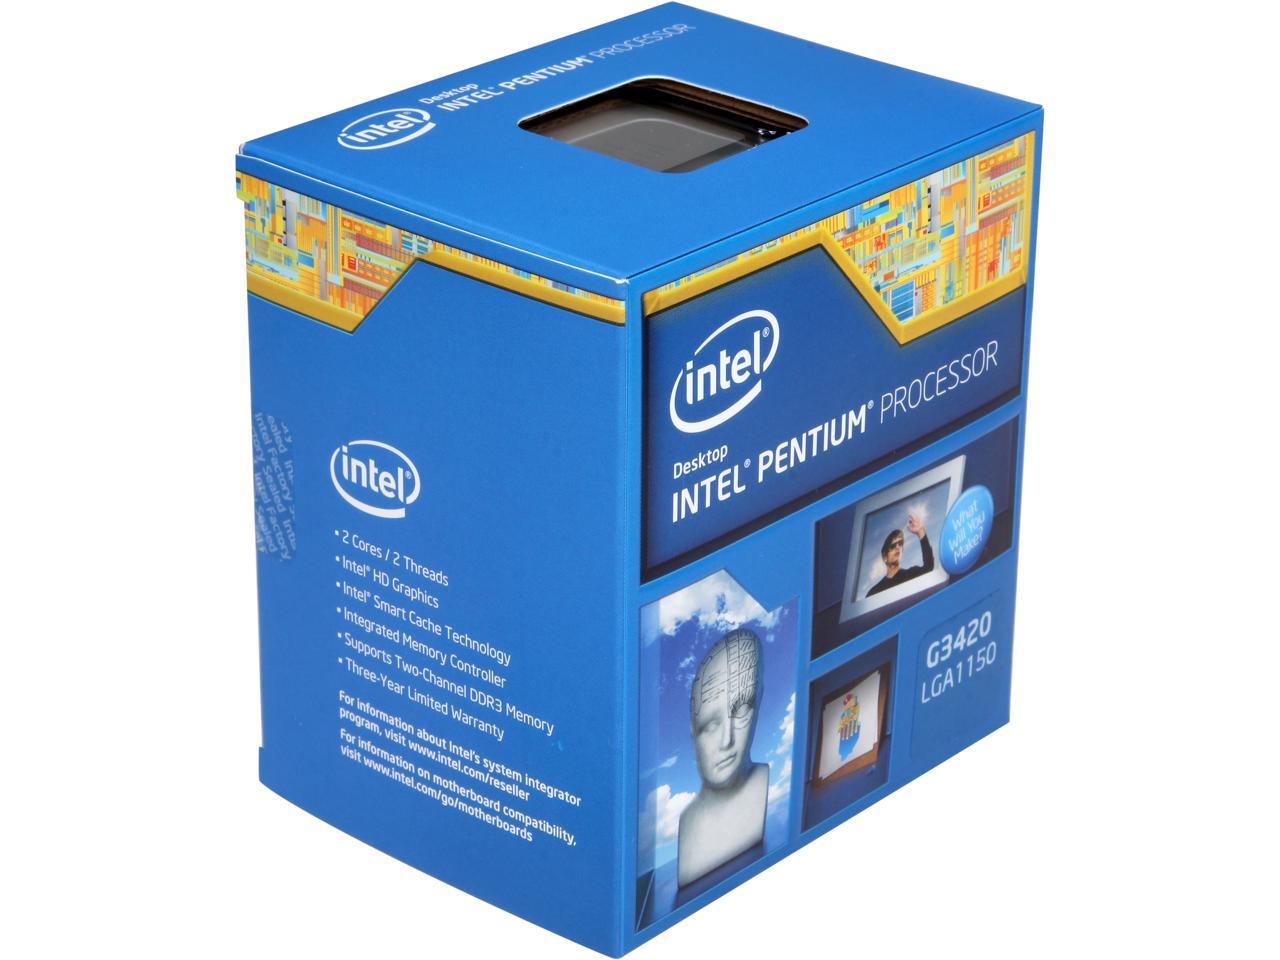 Regulatie Toepassen Manier Intel Pentium G3420 - Pentium Dual-Core Haswell Dual-Core 3.2 GHz LGA 1150  54W Intel HD Graphics Desktop Processor - BX80646G3420 - Newegg.com